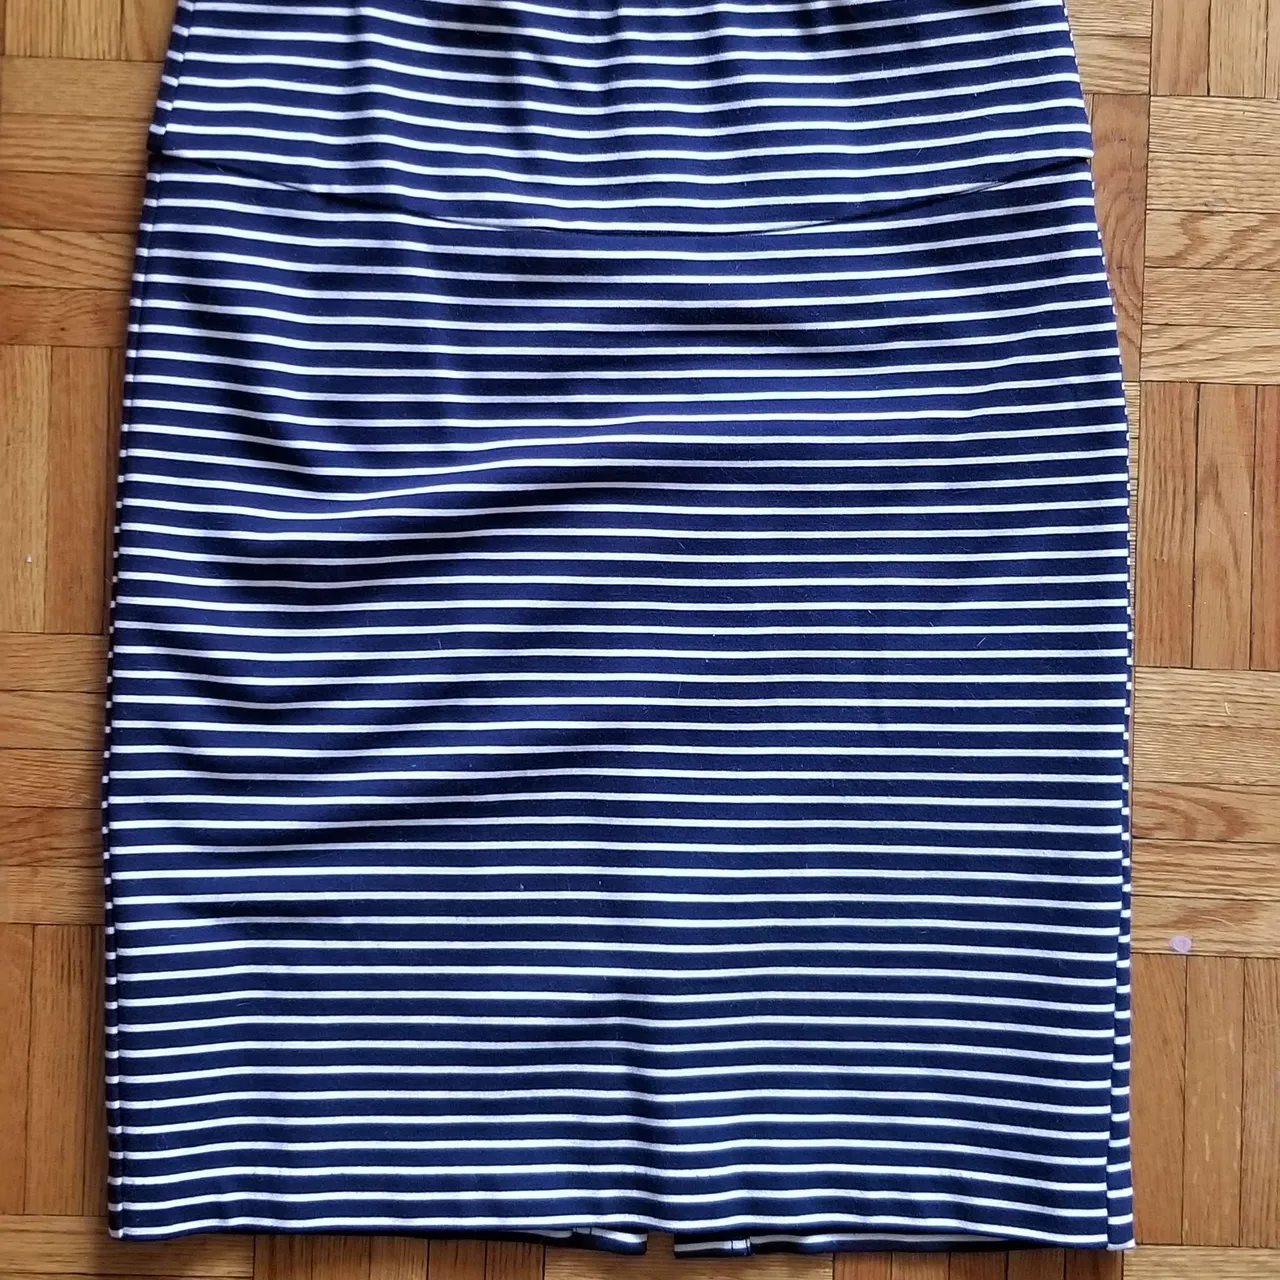 EUC - SM SUNG Blue and White Striped Pencil Skirt photo 1